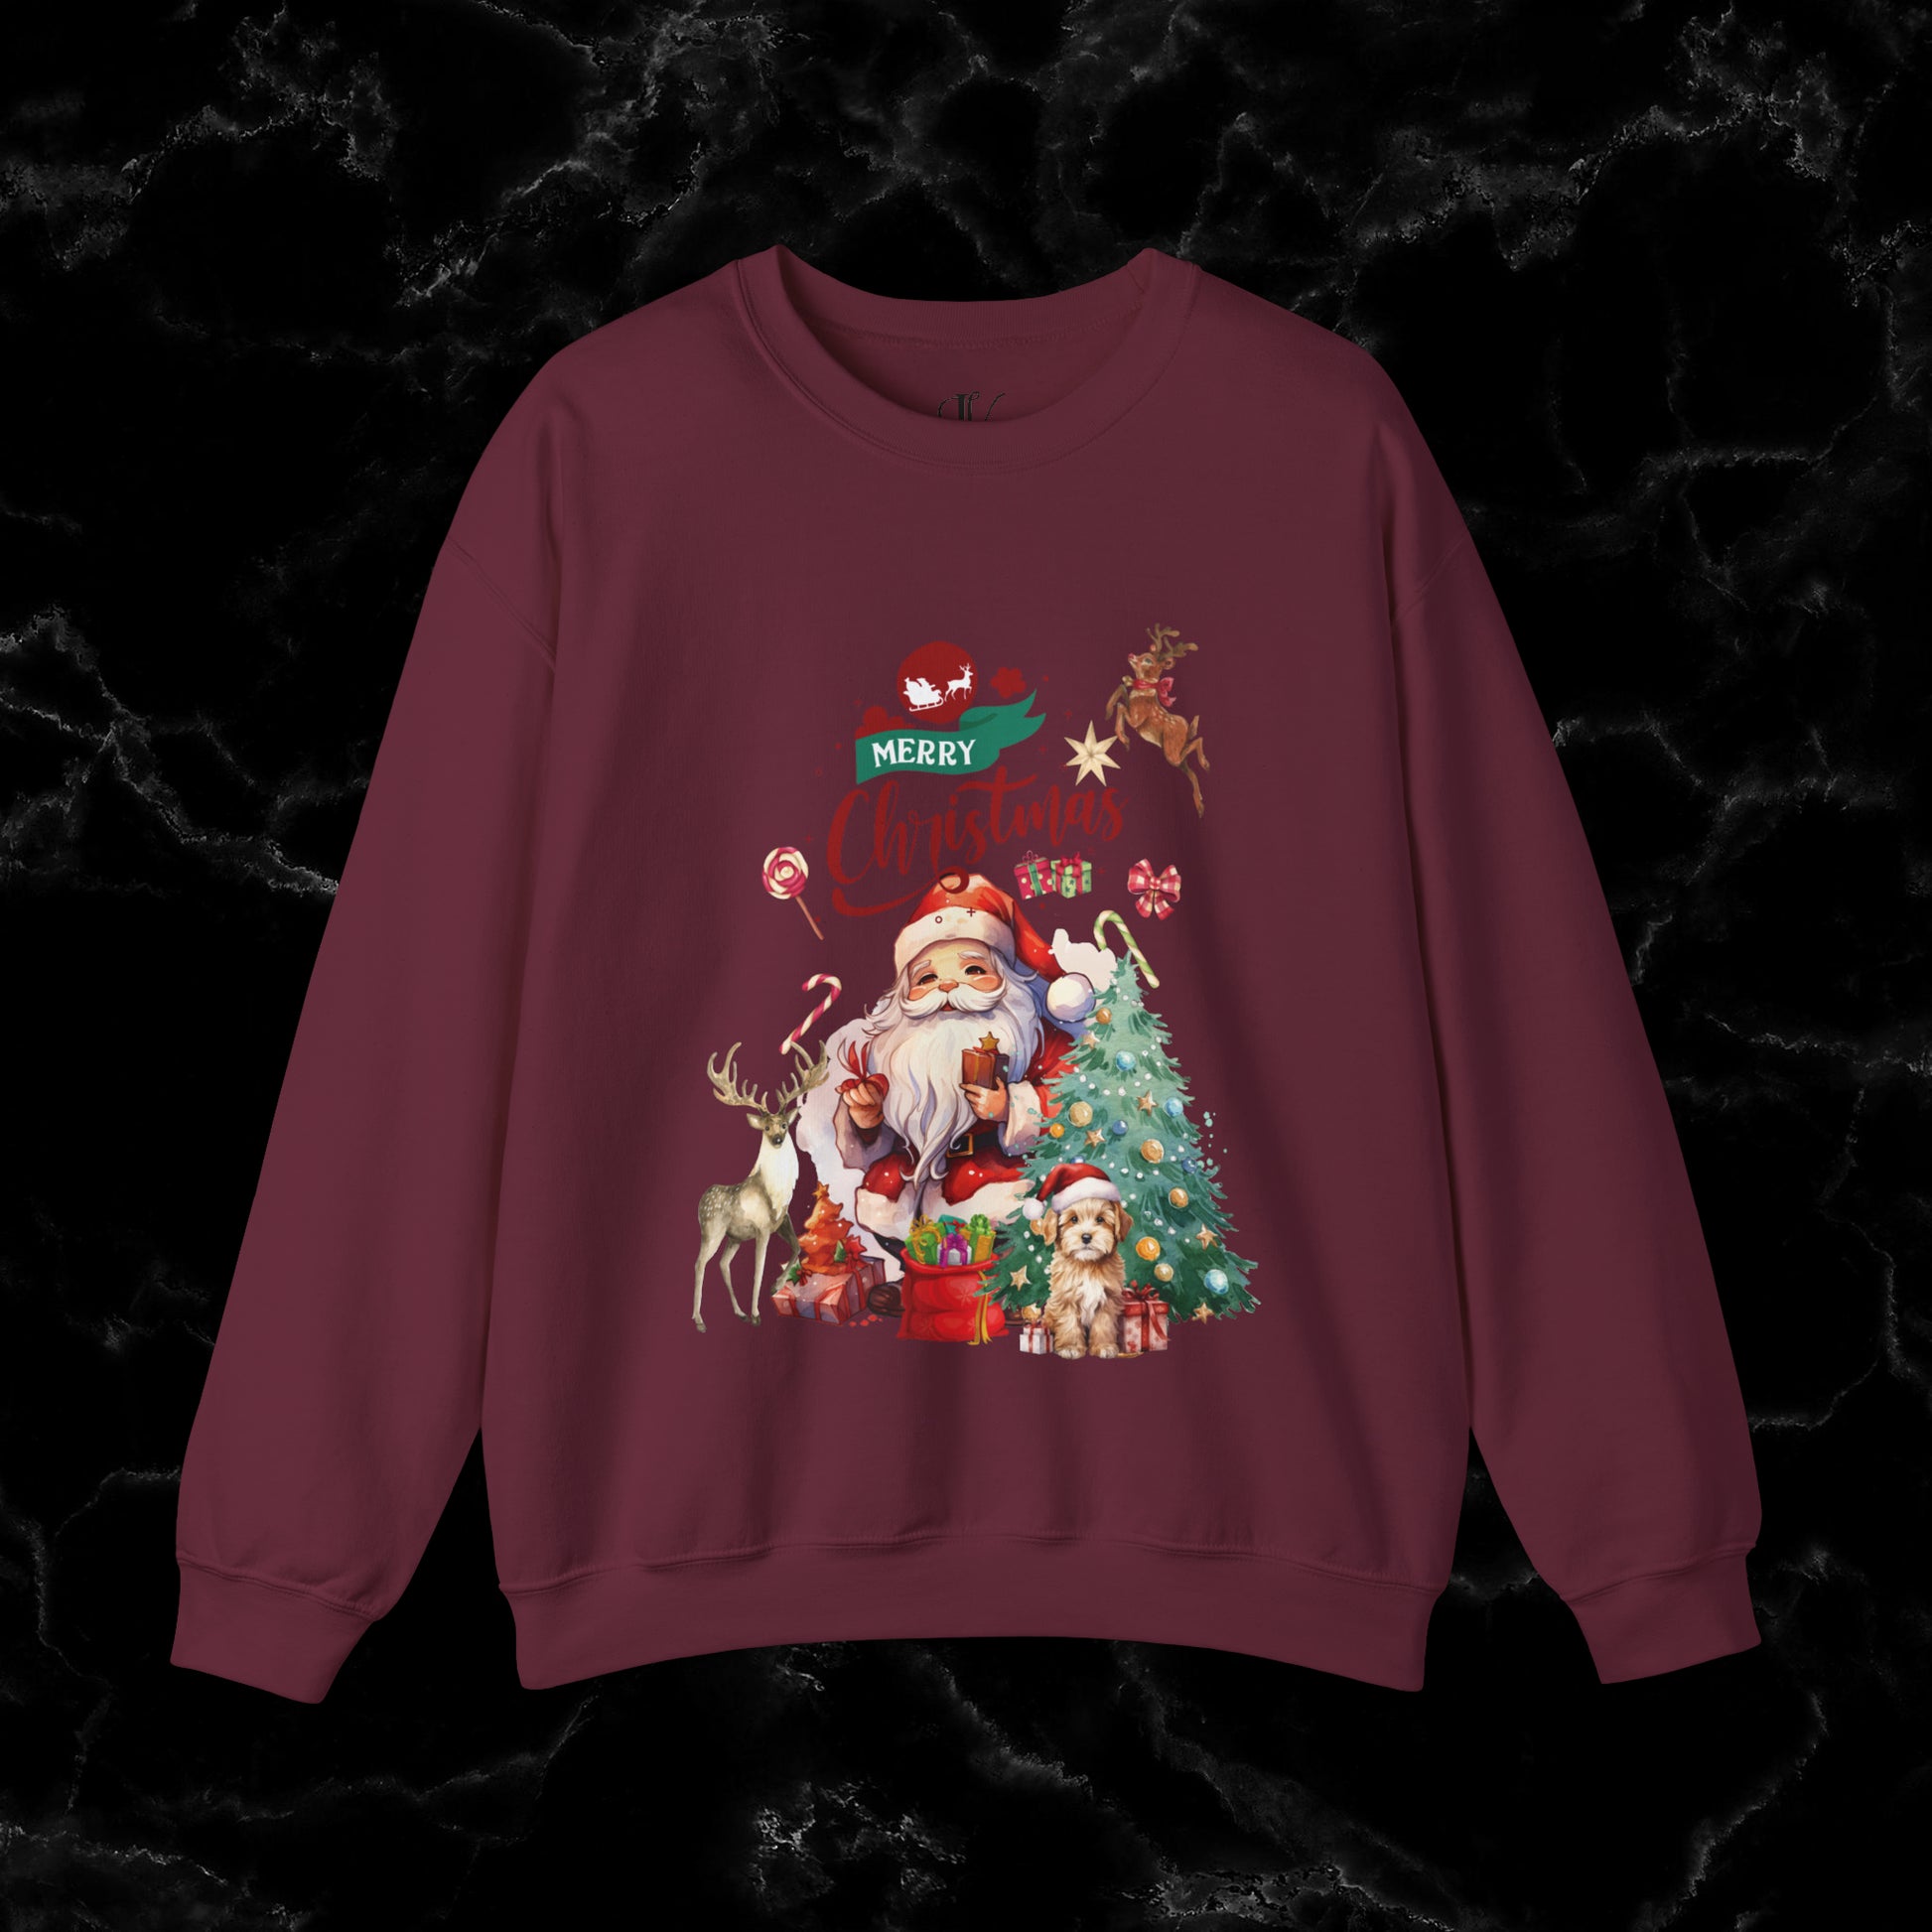 Merry Christmas Sweatshirt | Christmas Shirt - Matching Christmas Shirt - Santa Claus Merry Christmas Sweatshirt - Holiday Gift - Christmas Gift Sweatshirt S Maroon 